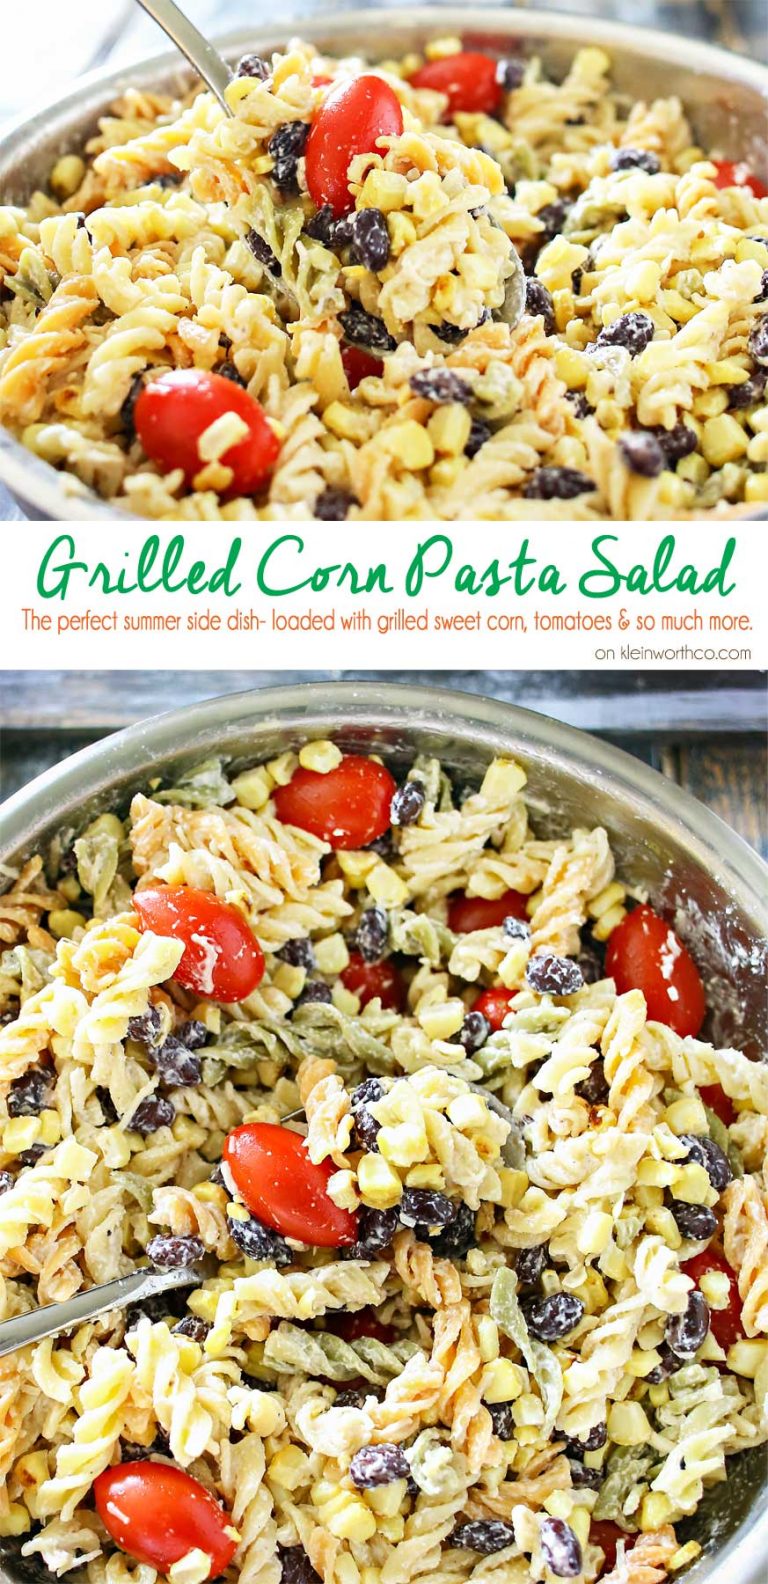 Grilled Corn Pasta Salad - Taste of the Frontier